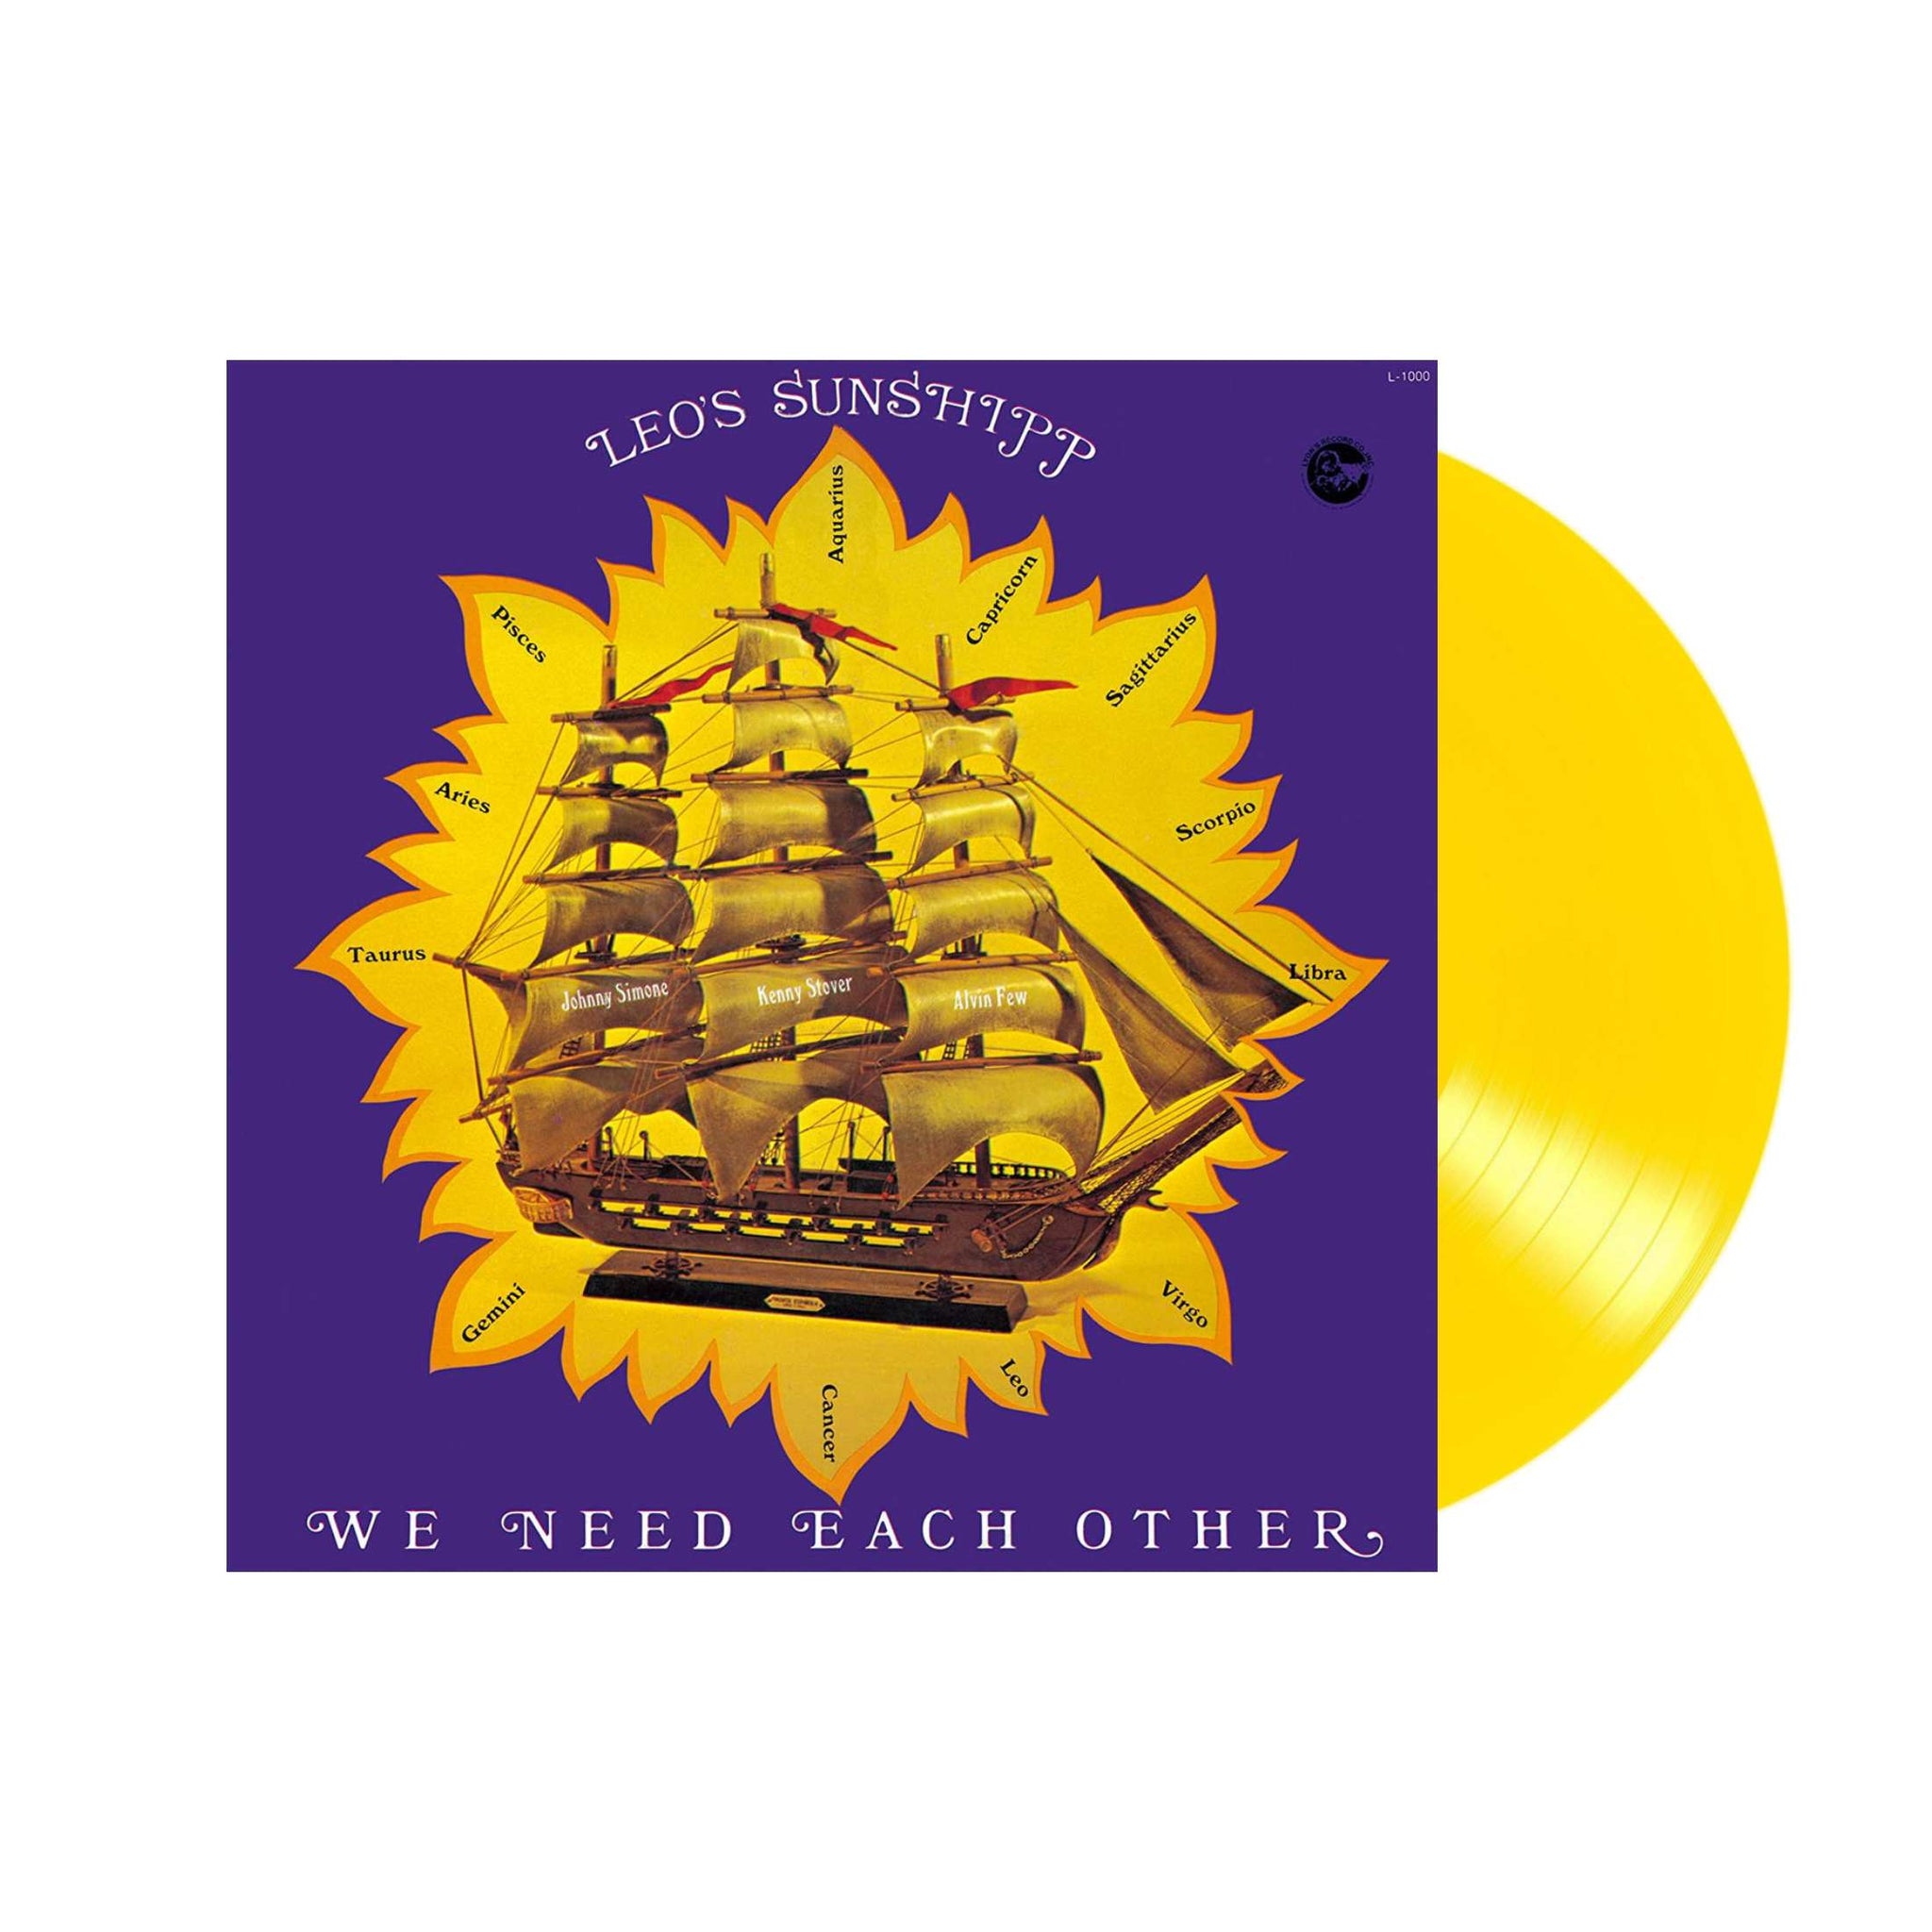 Leo's Sunshipp - We Need Each Other LP (Yellow  Vinyl)